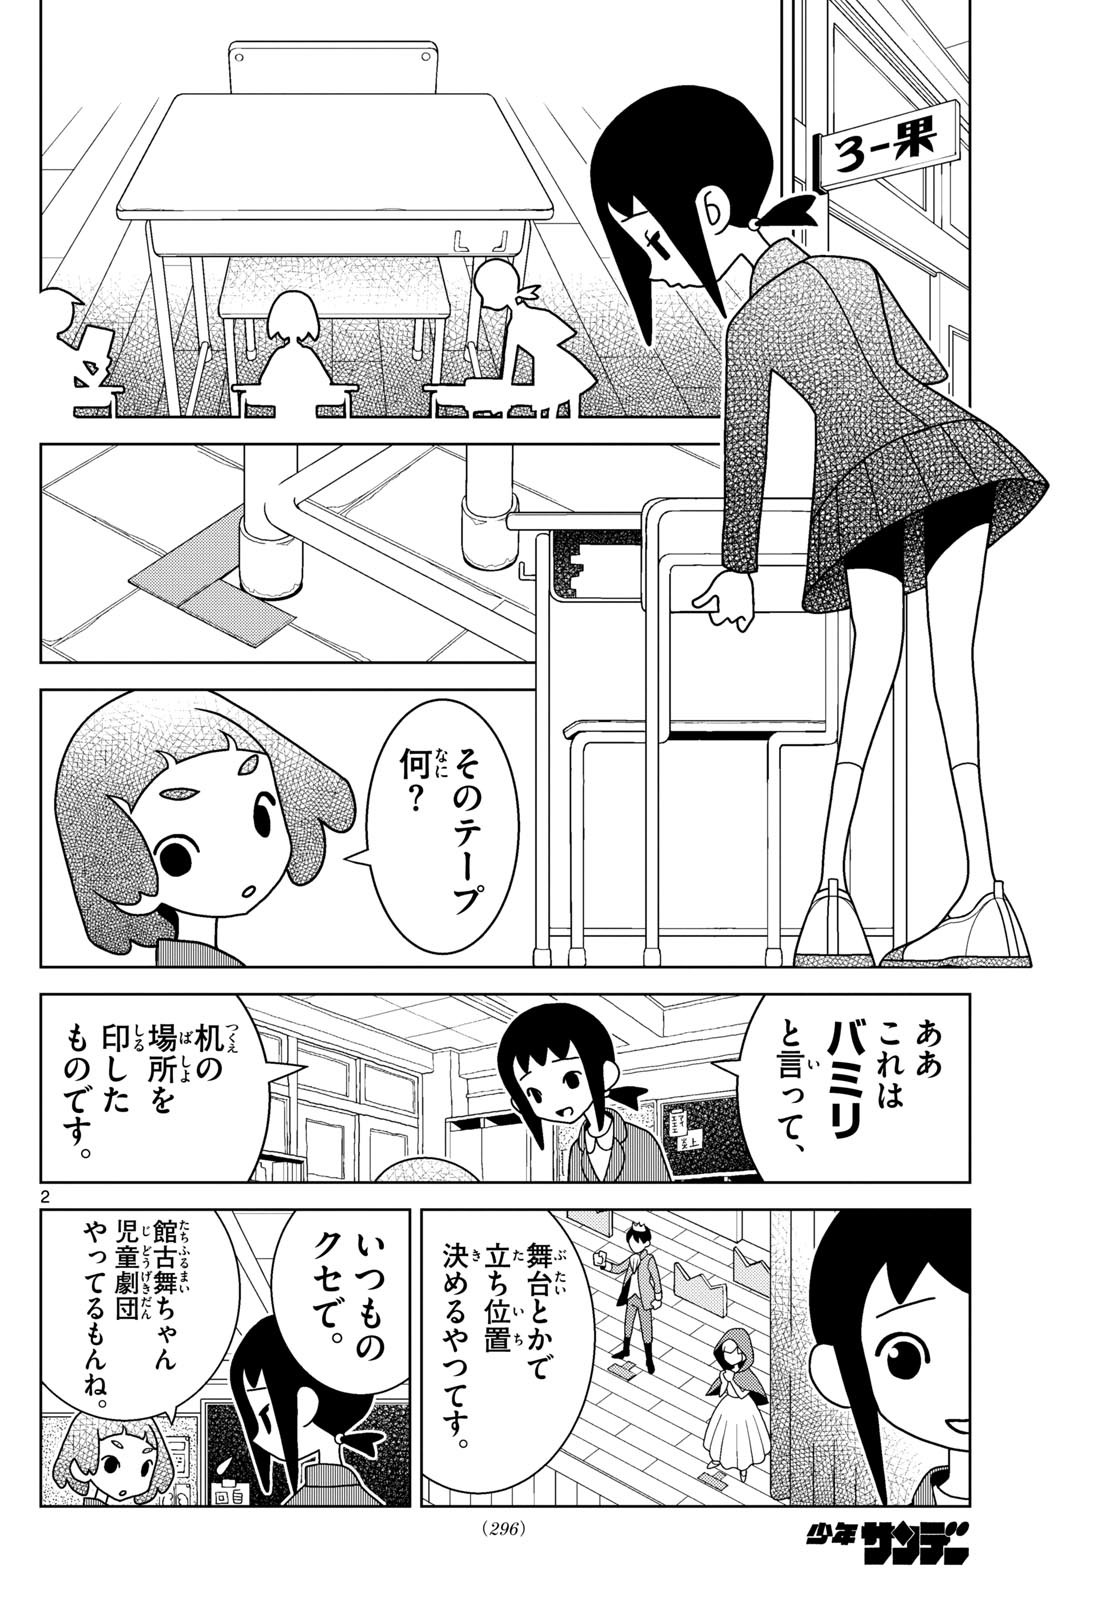 Shibuya Near Family - Chapter 092 - Page 2